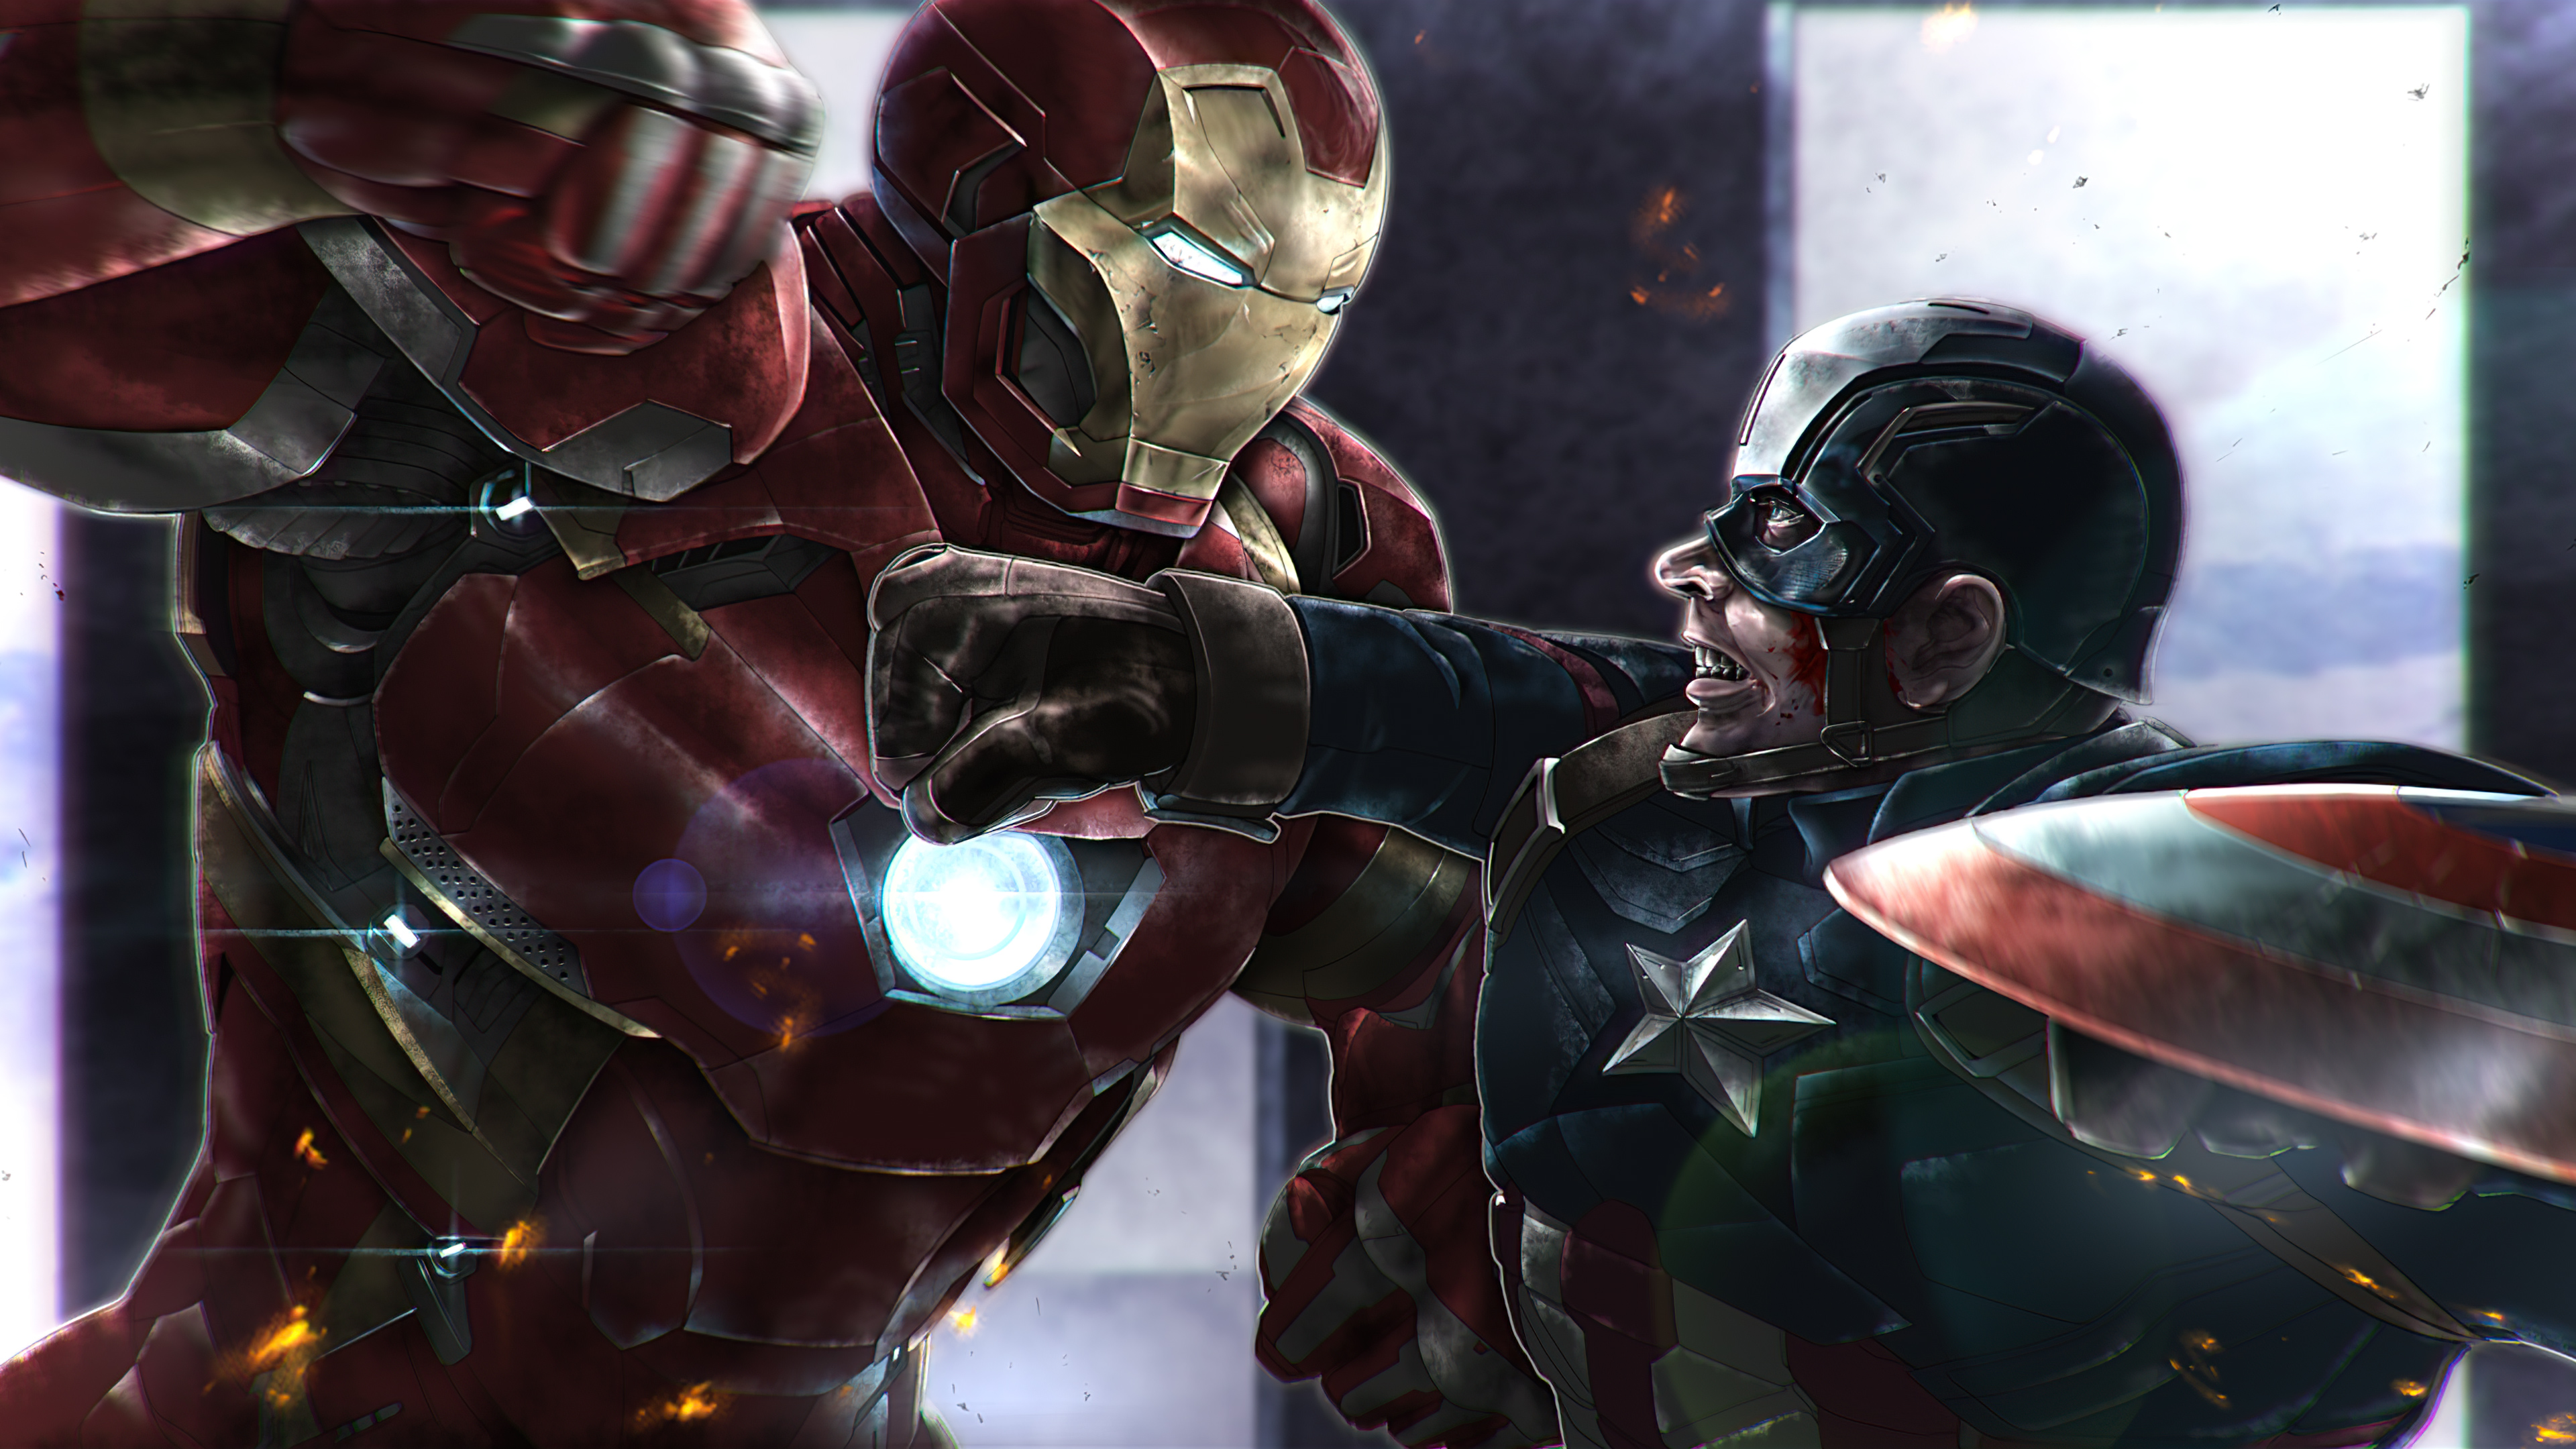 Captain America Vs Iron Man Wallpapers